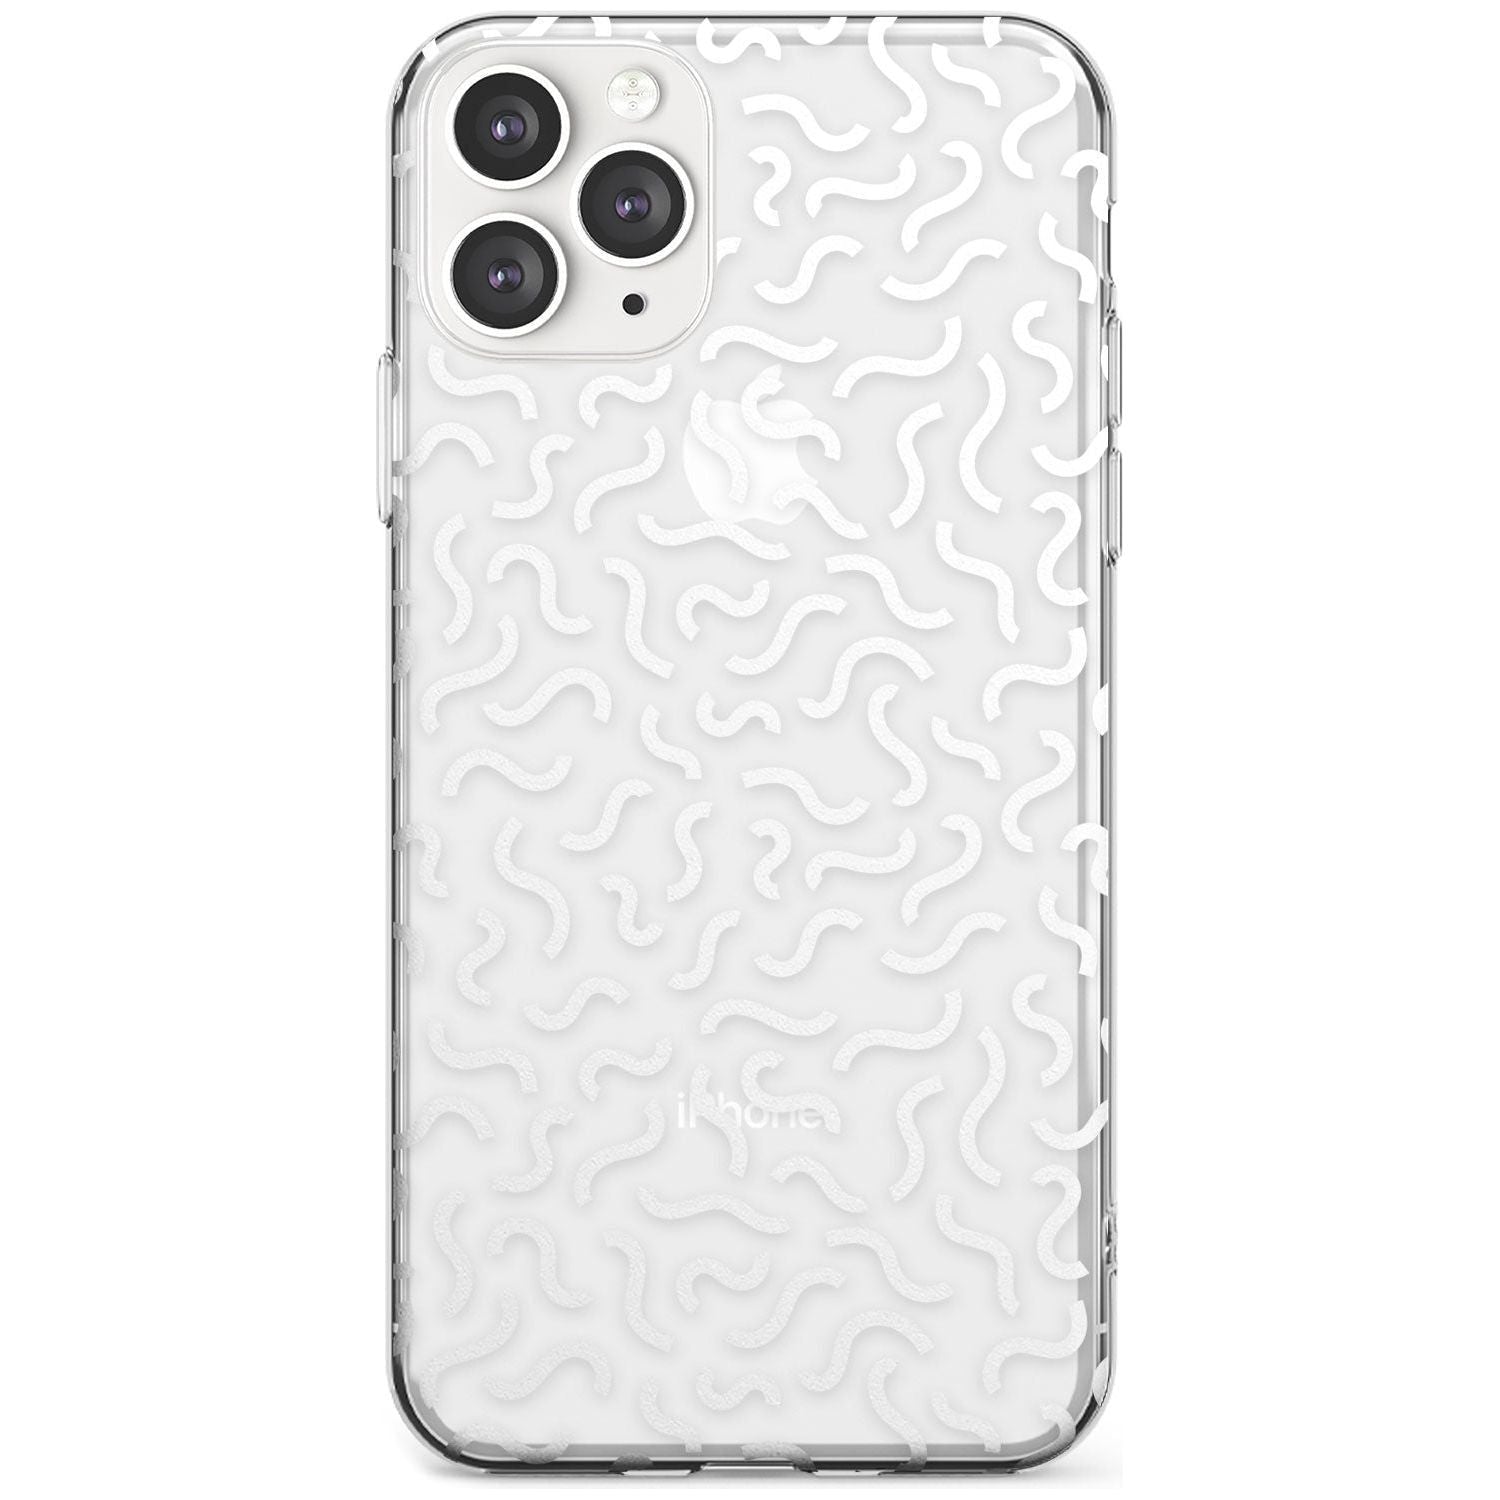 White Wavy Squiggles Memphis Retro Pattern Design Slim TPU Phone Case for iPhone 11 Pro Max